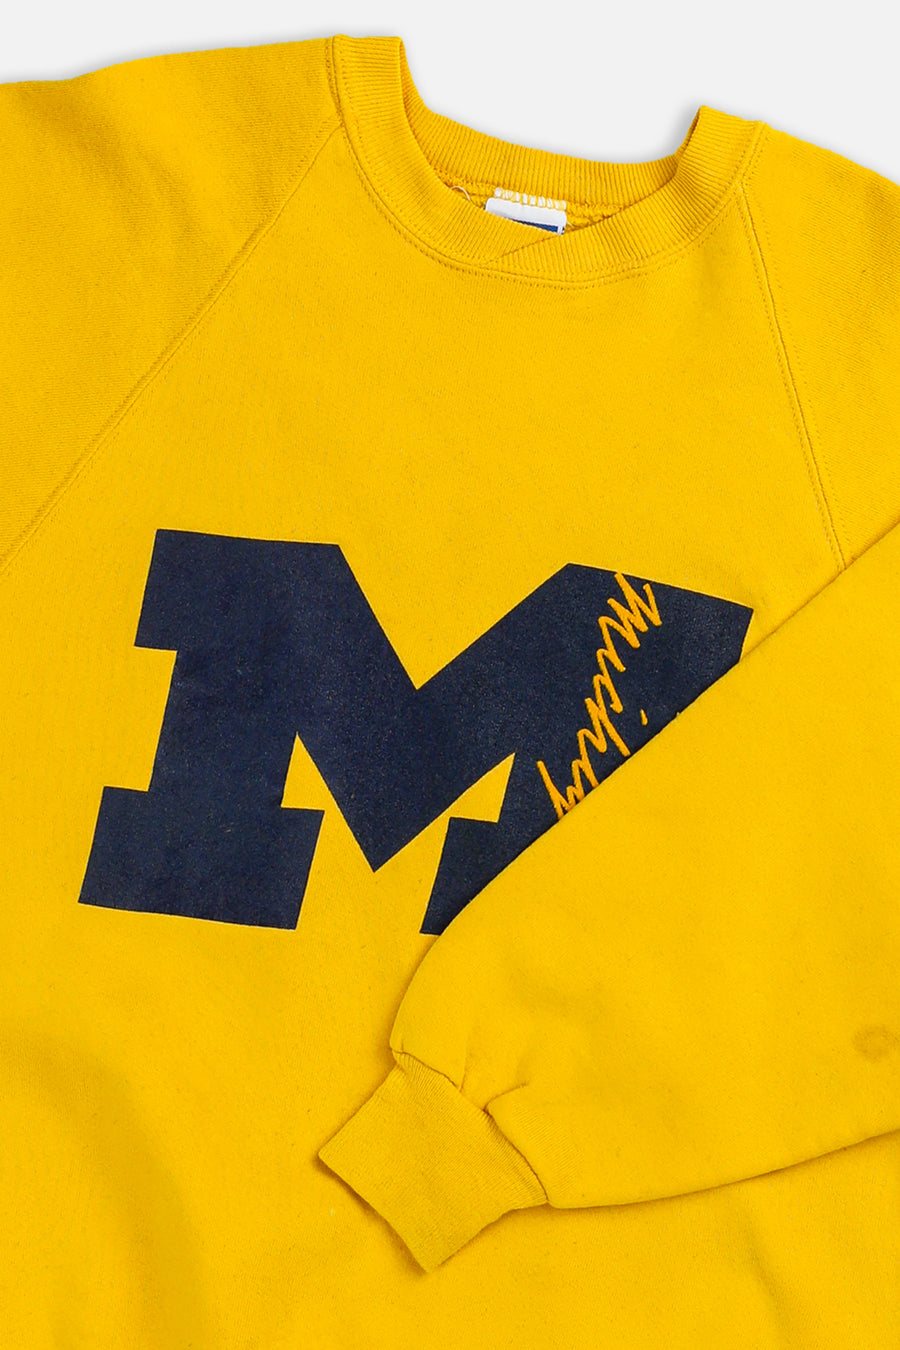 Vintage Michigan Sweatshirt - M